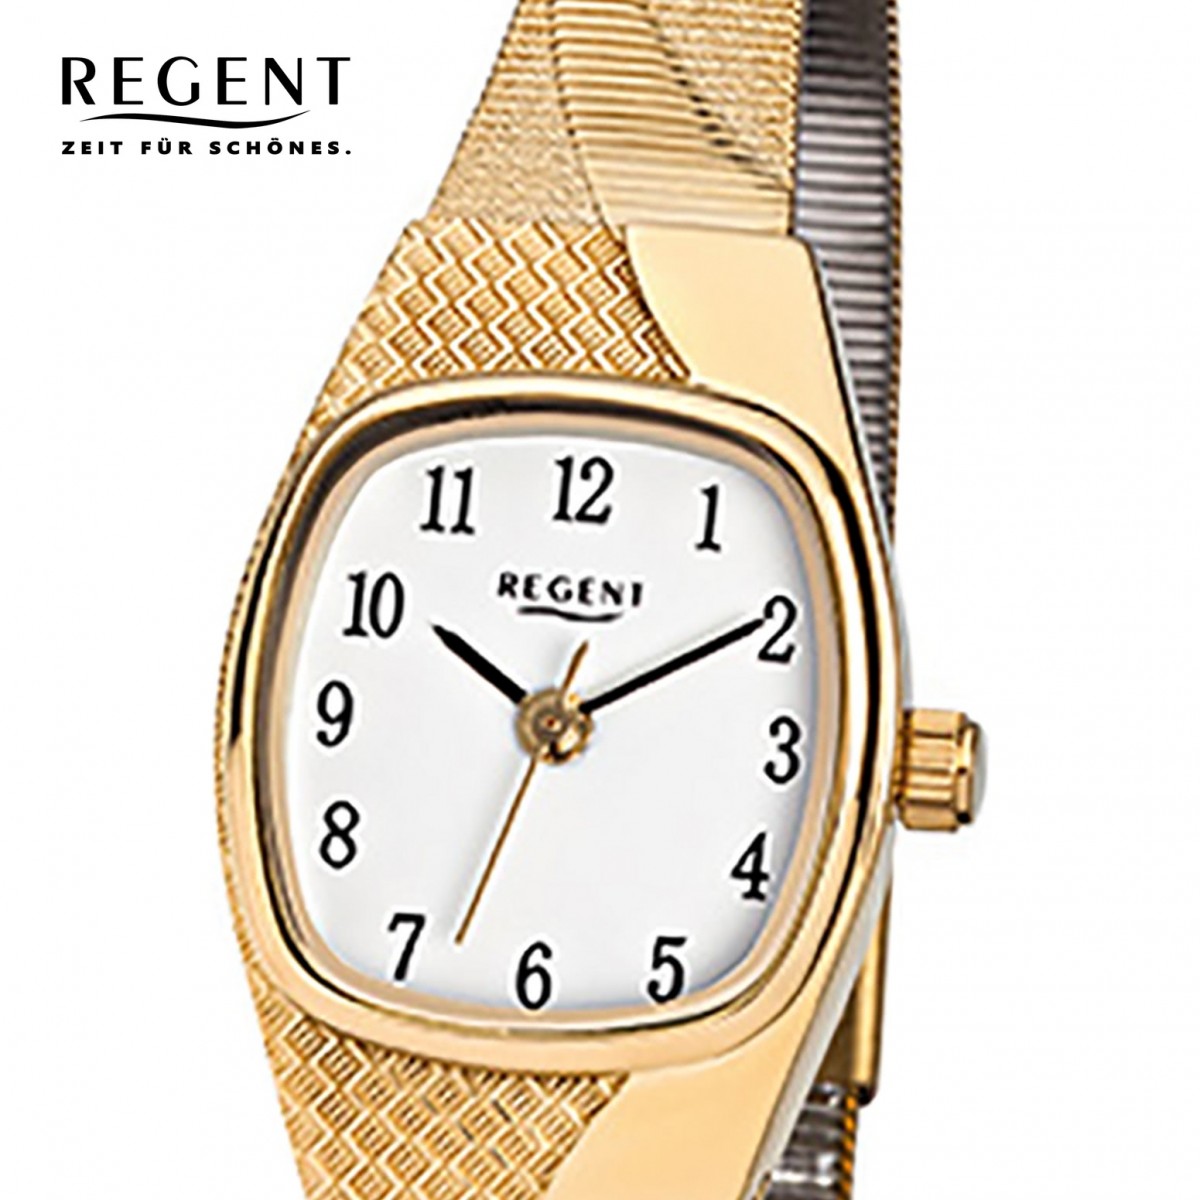 - - URF624 Regent Metallarmband gold Edelstahl - Quarzwerk Damen-Uhr